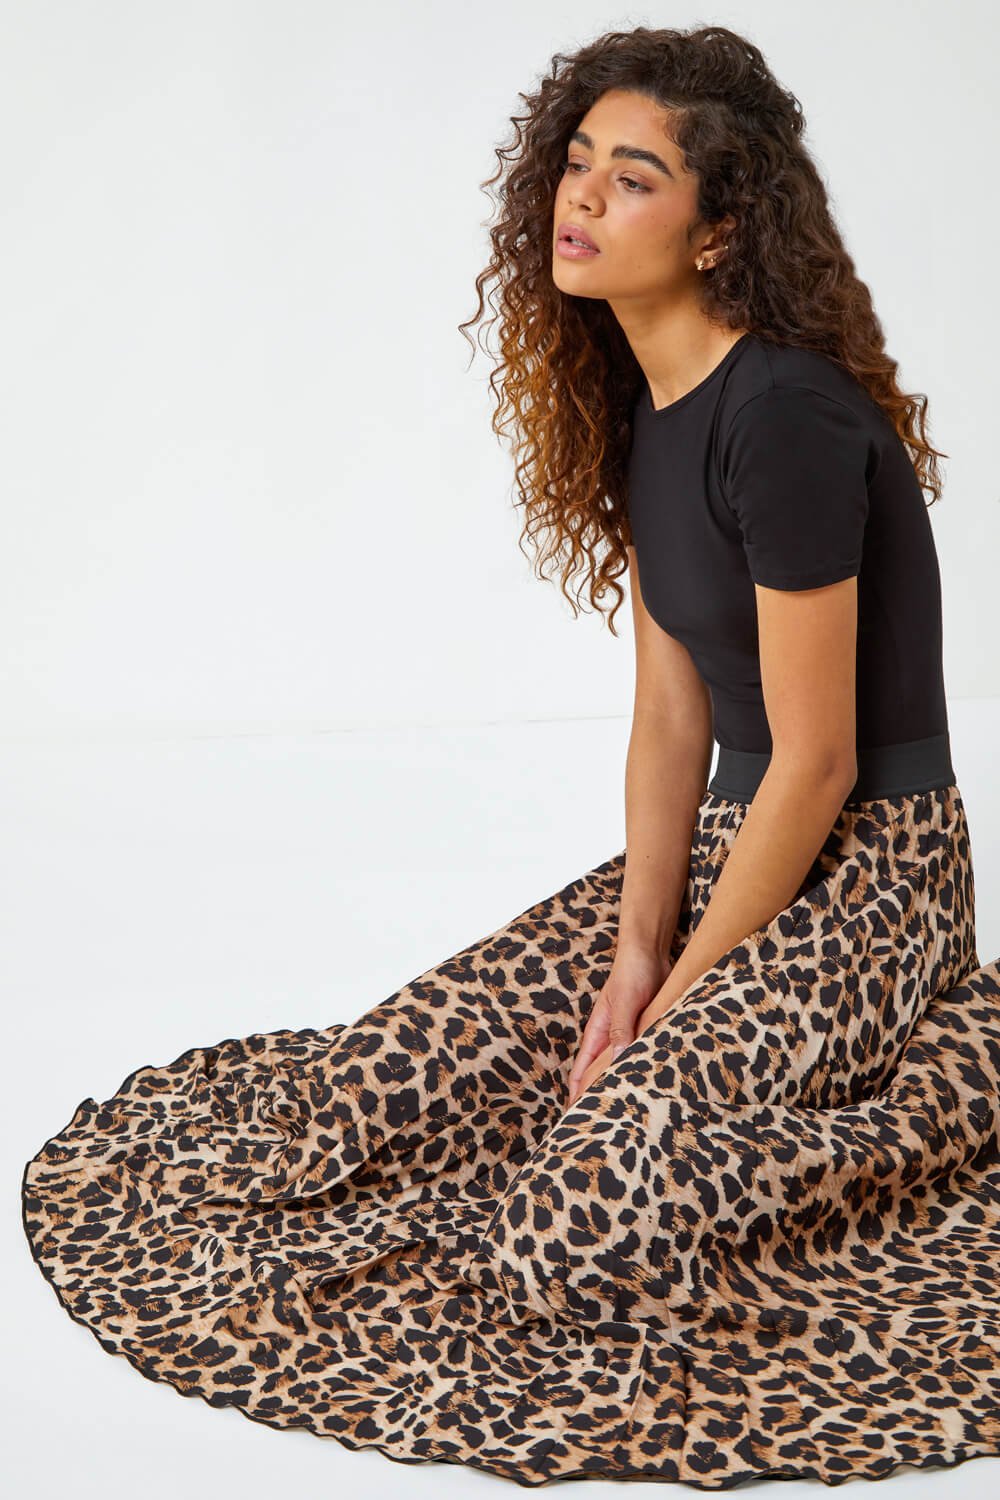 How To Wear One Leopard Print Skirt 3 Ways | Oh Darling Blog-iangel.vn